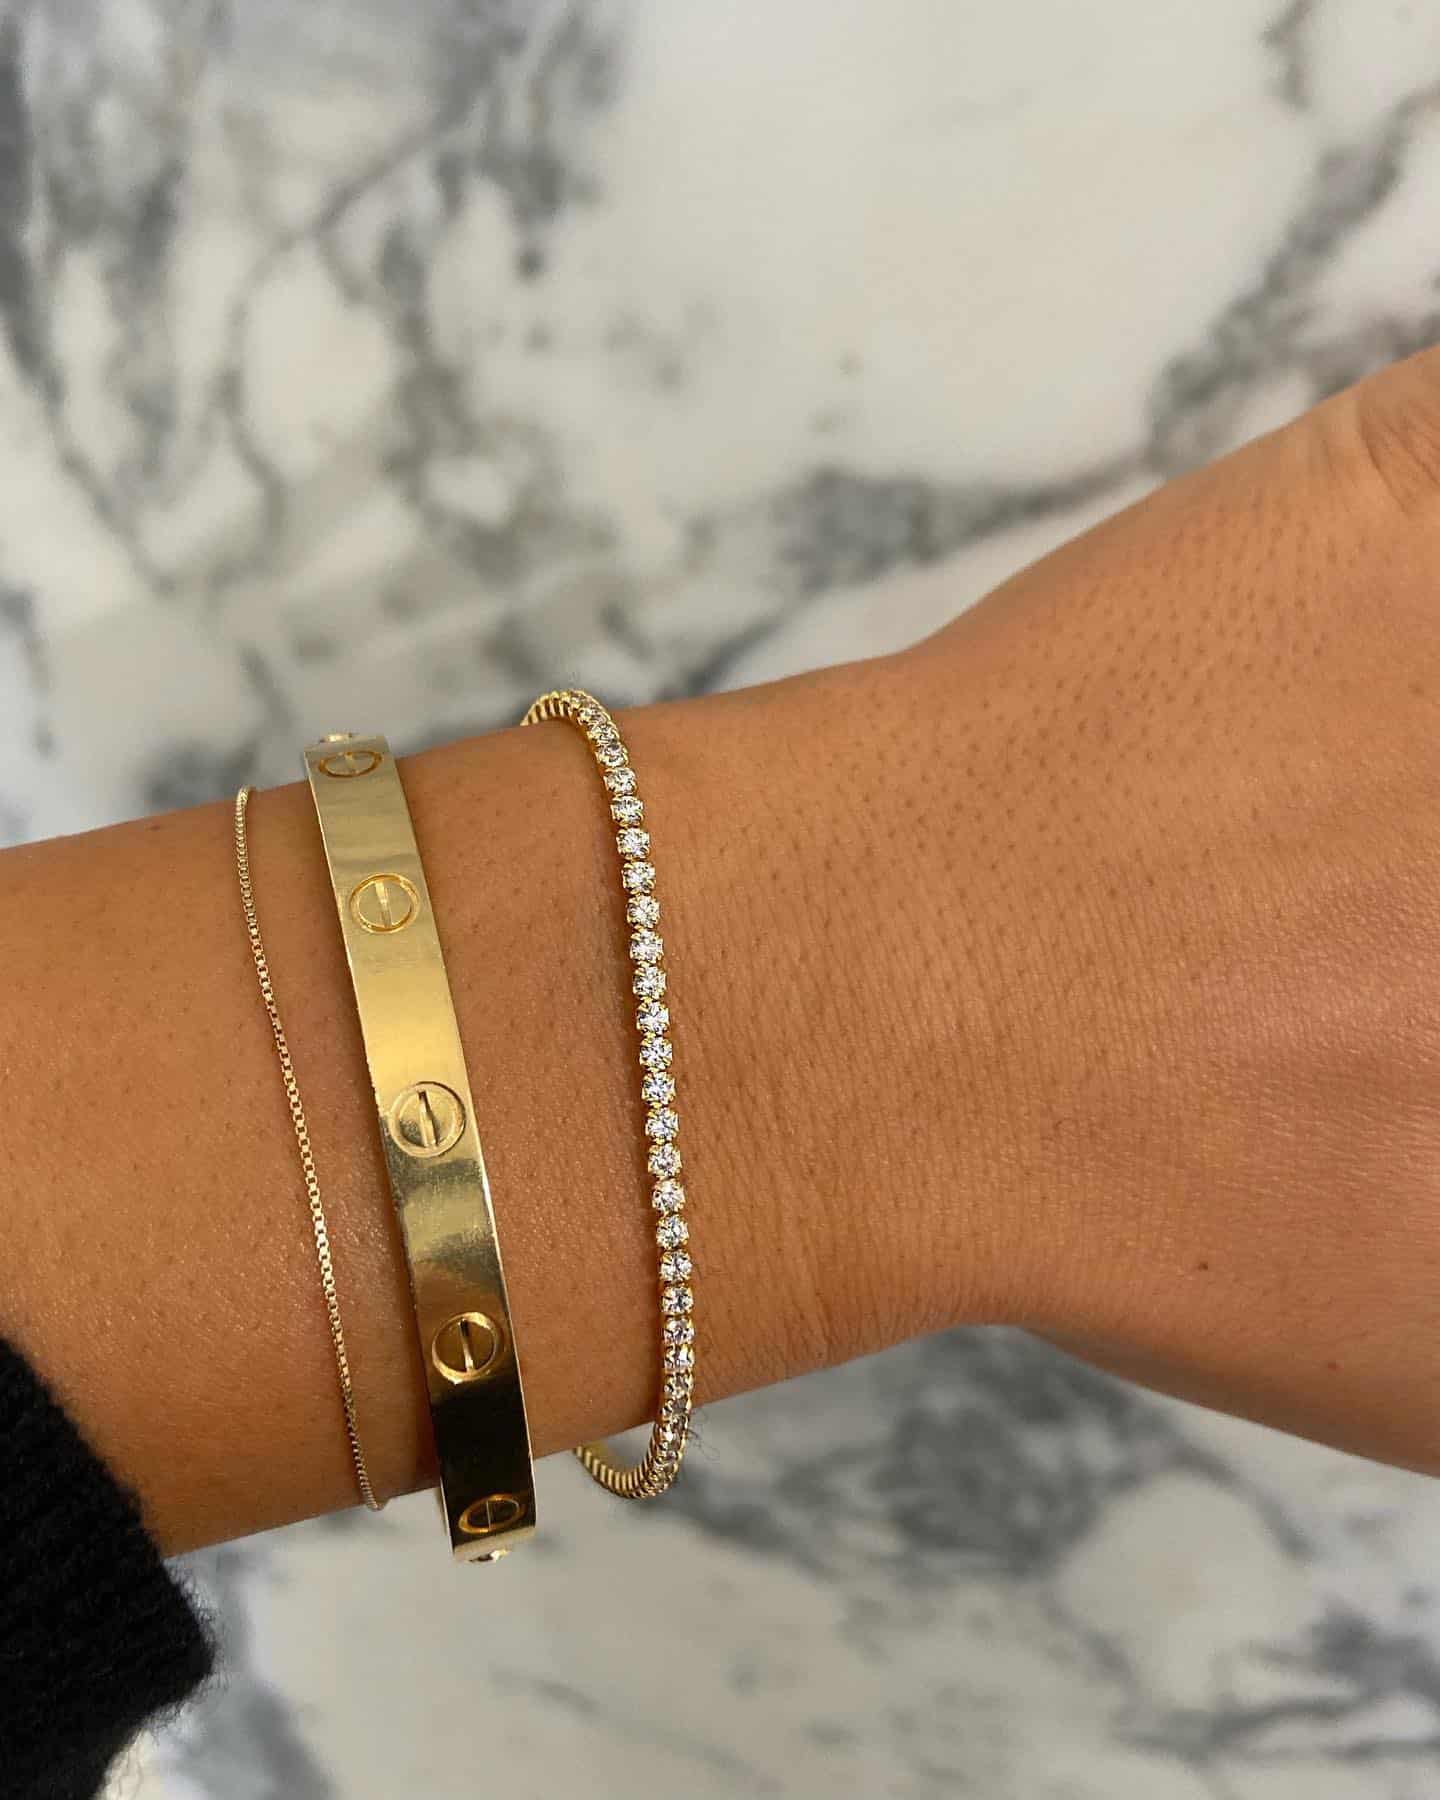 Closeup of the Cartier love bracelet and a dimaond tennis bracelet